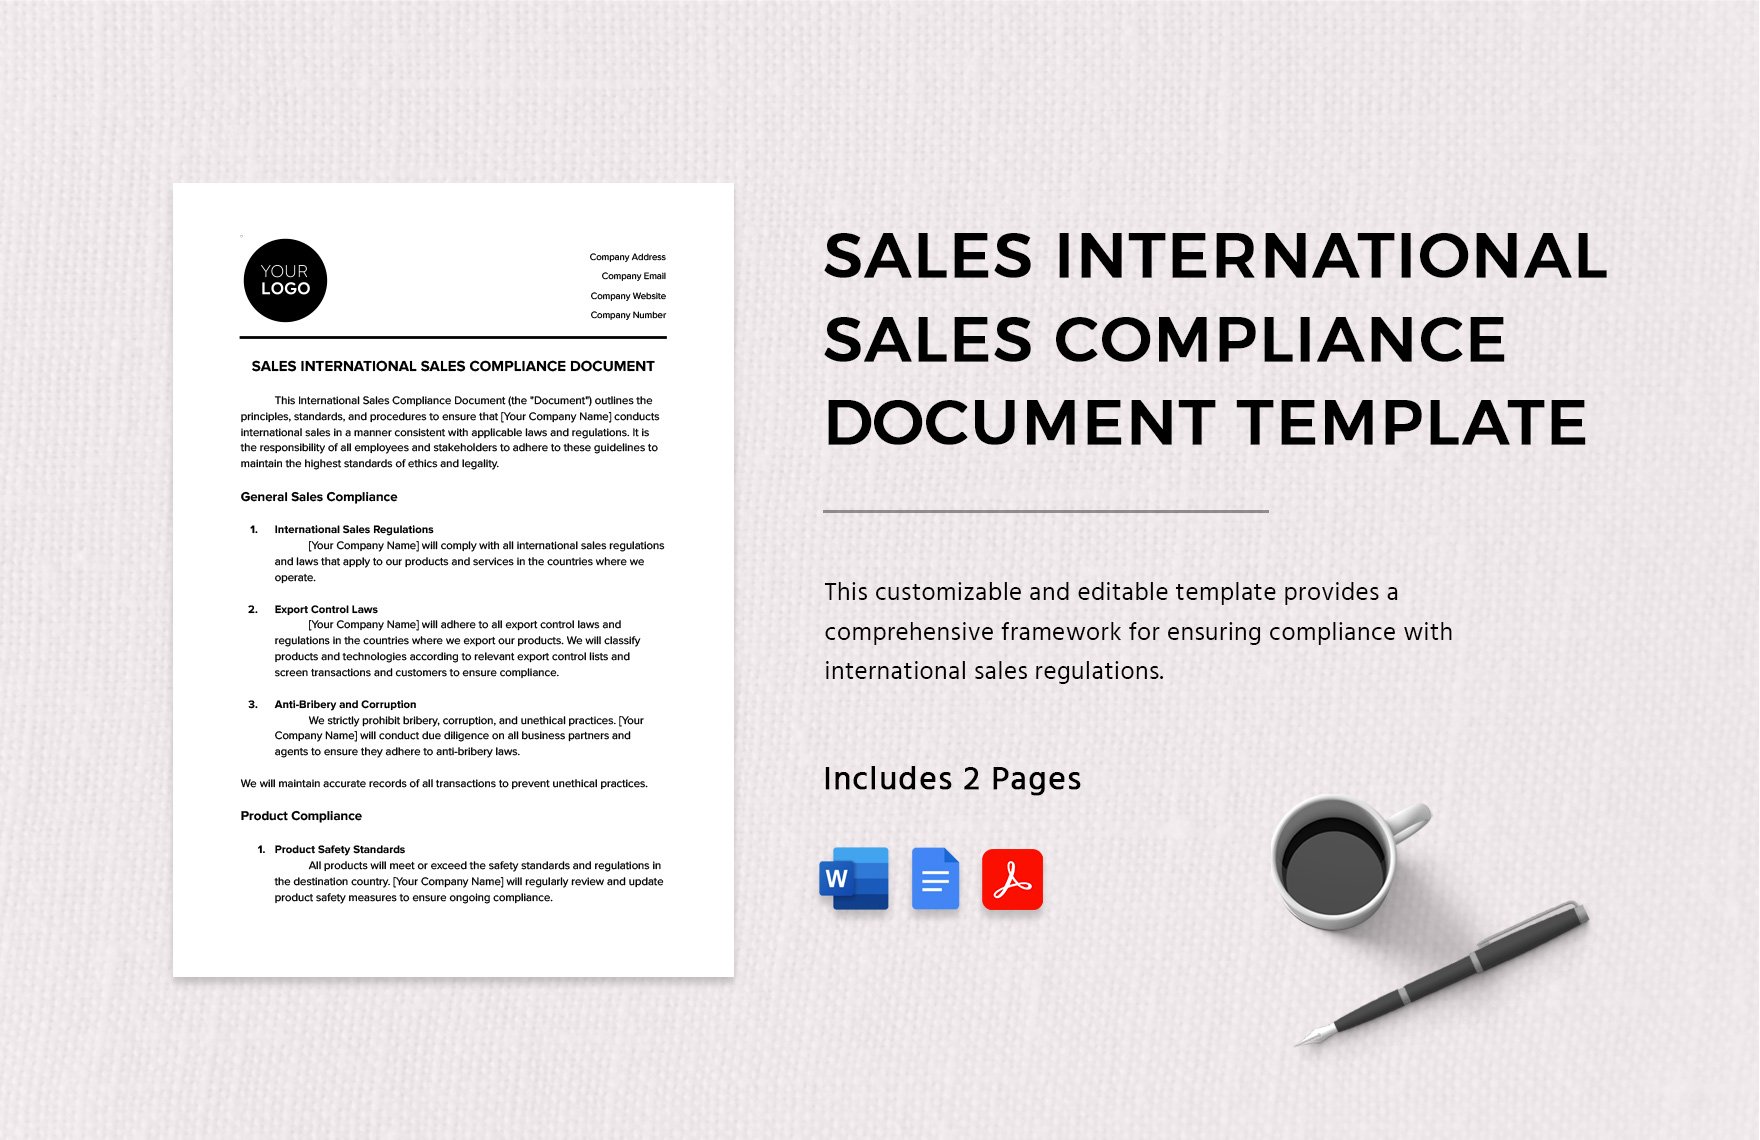 Sales International Sales Compliance Document Template